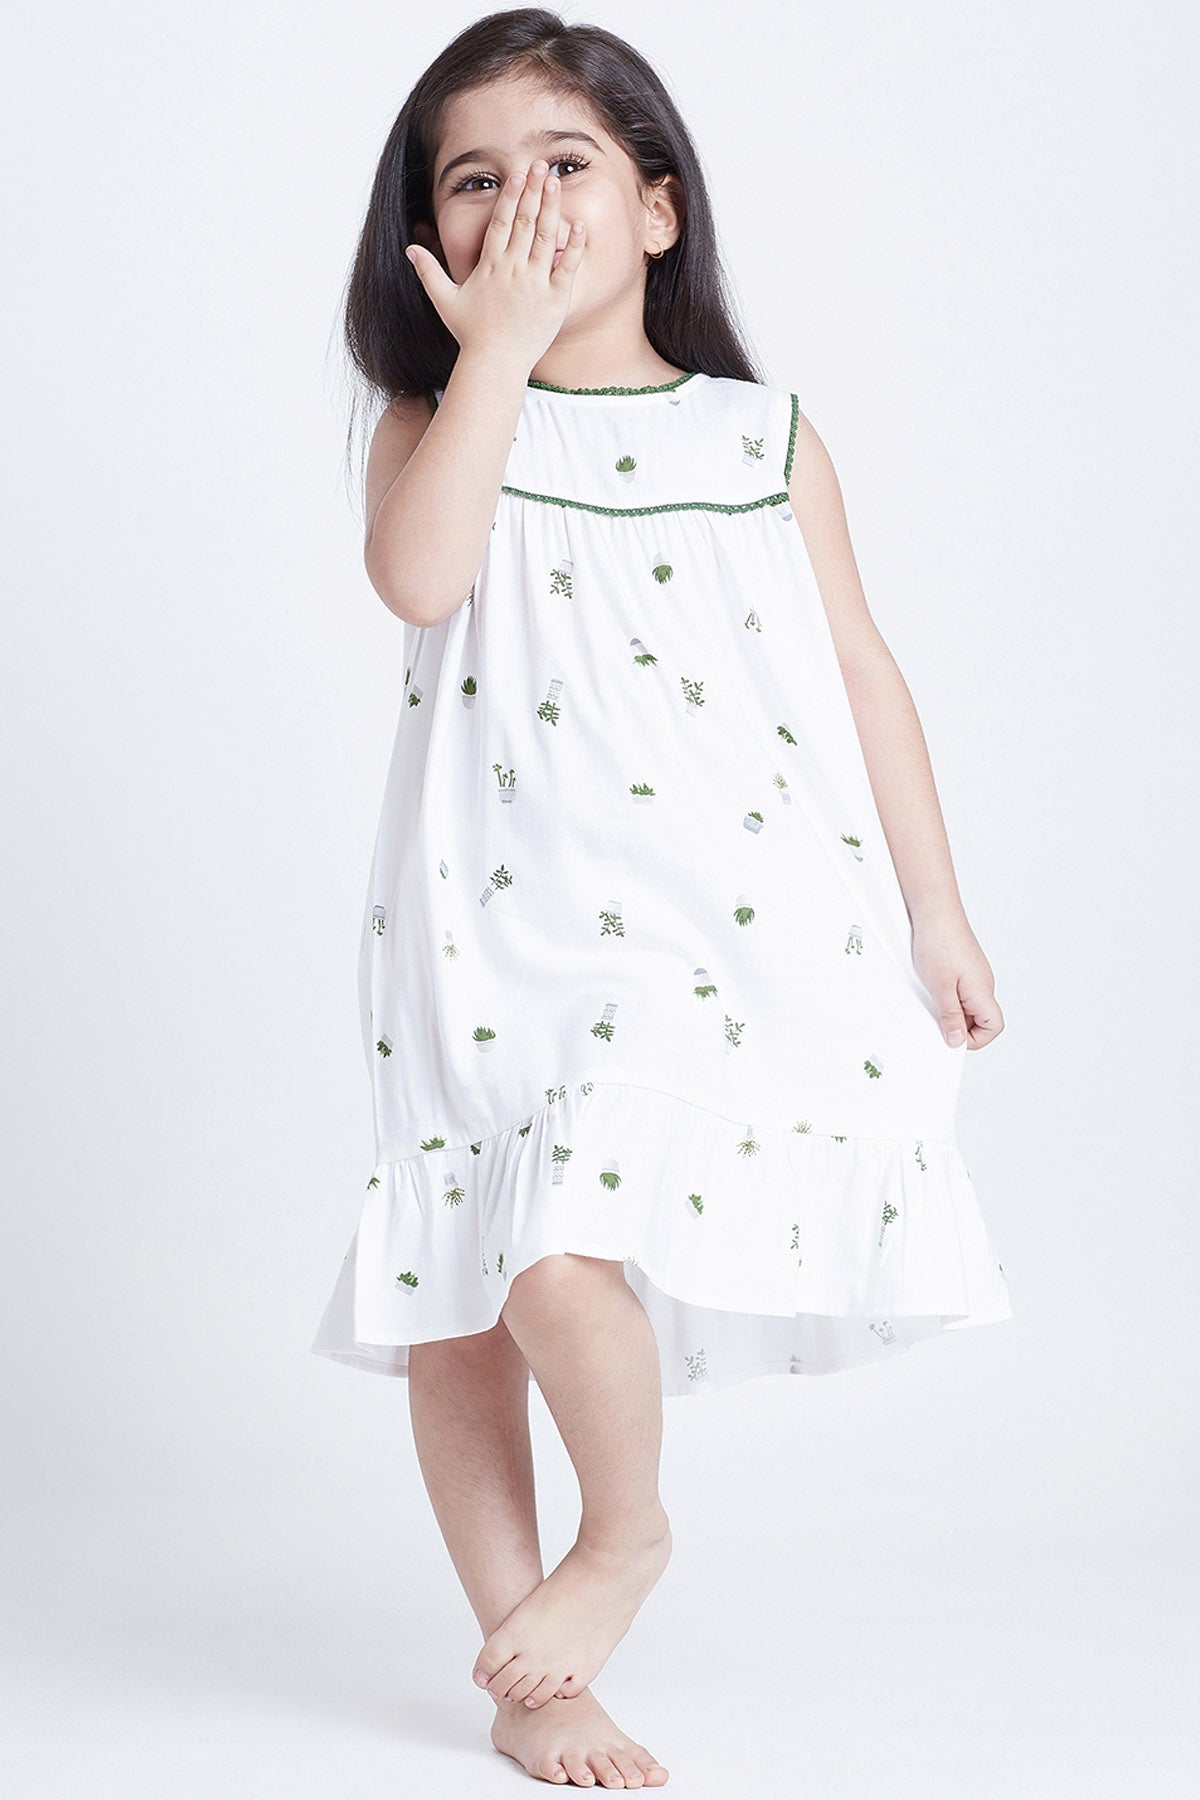 Bohobi White Cotton Tree Print Dress for kids online at ScrollnShops